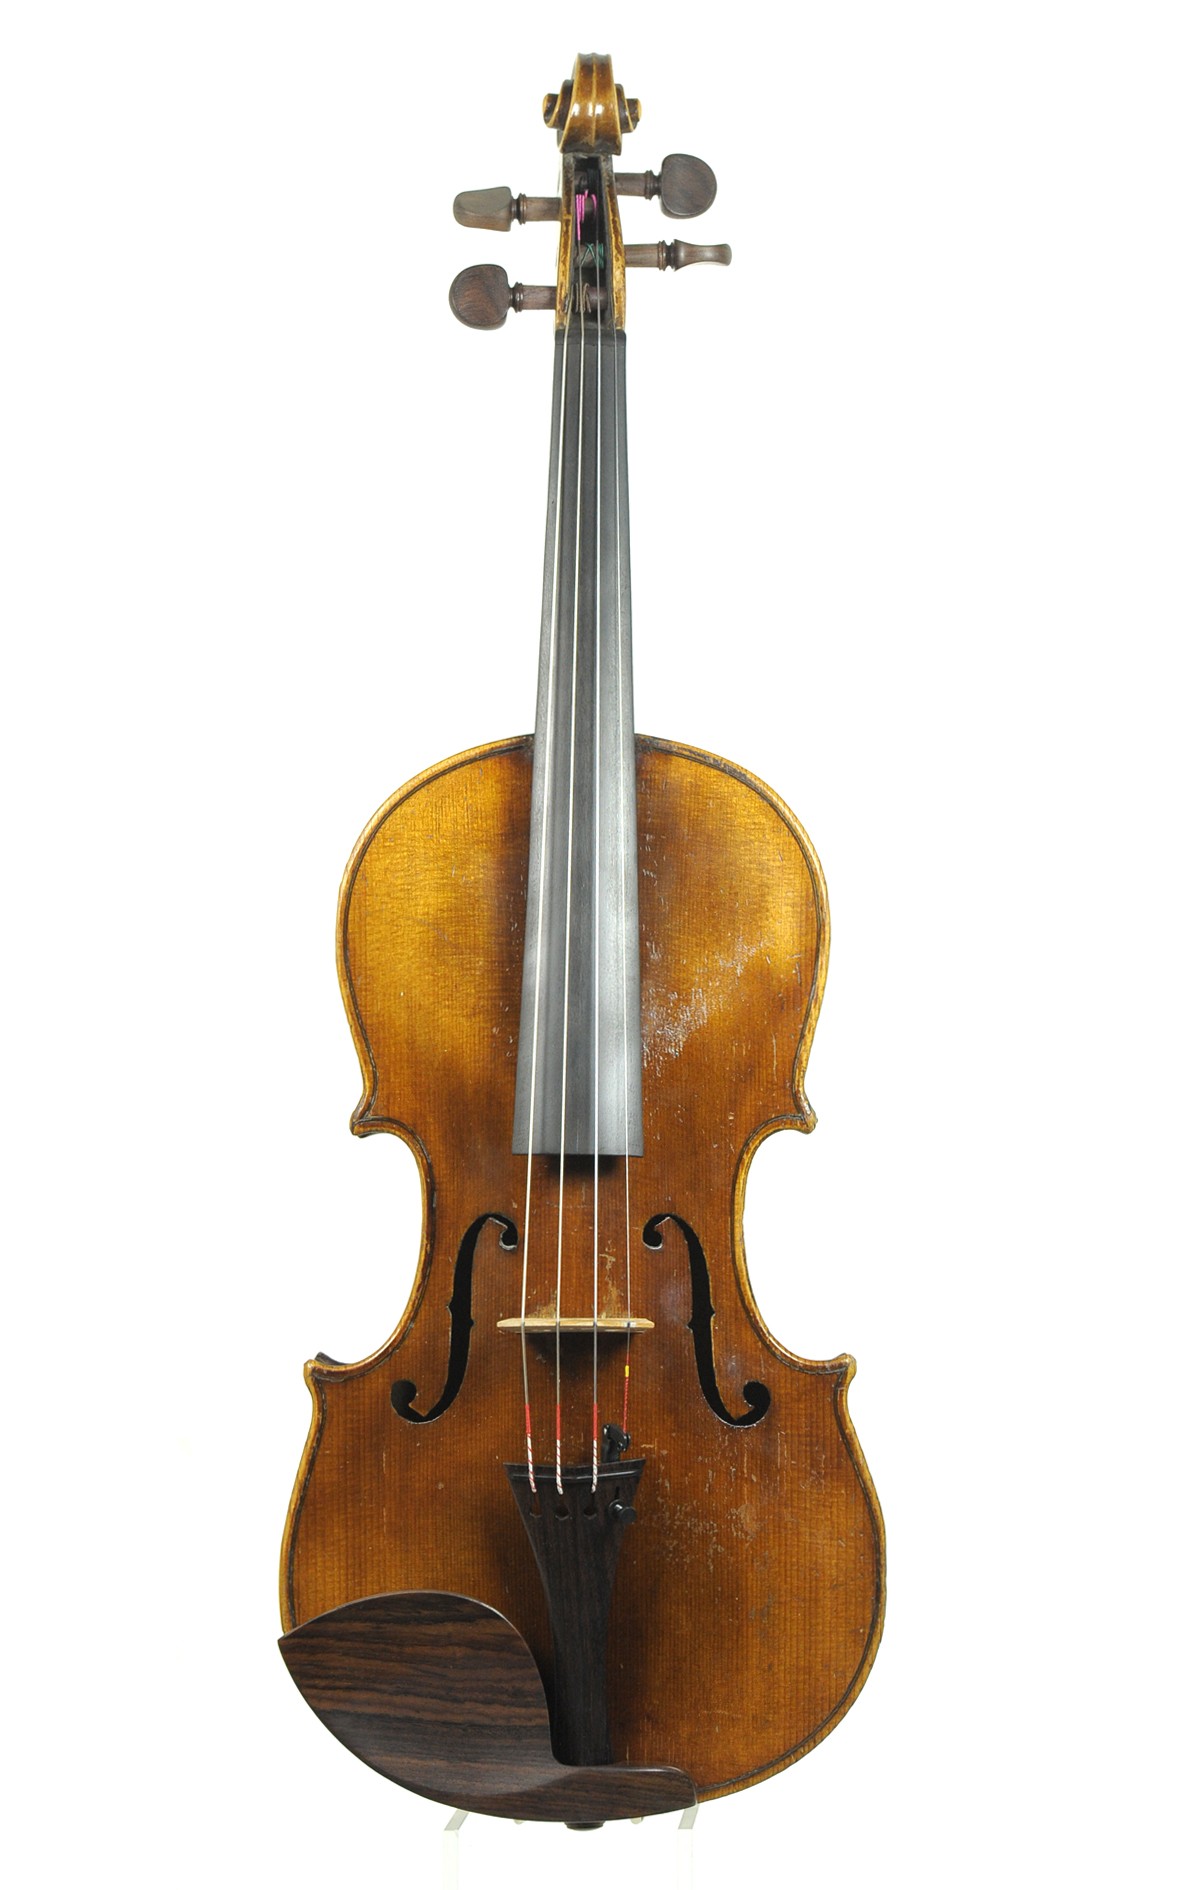 Klingenthal violin approx. 1850 - top